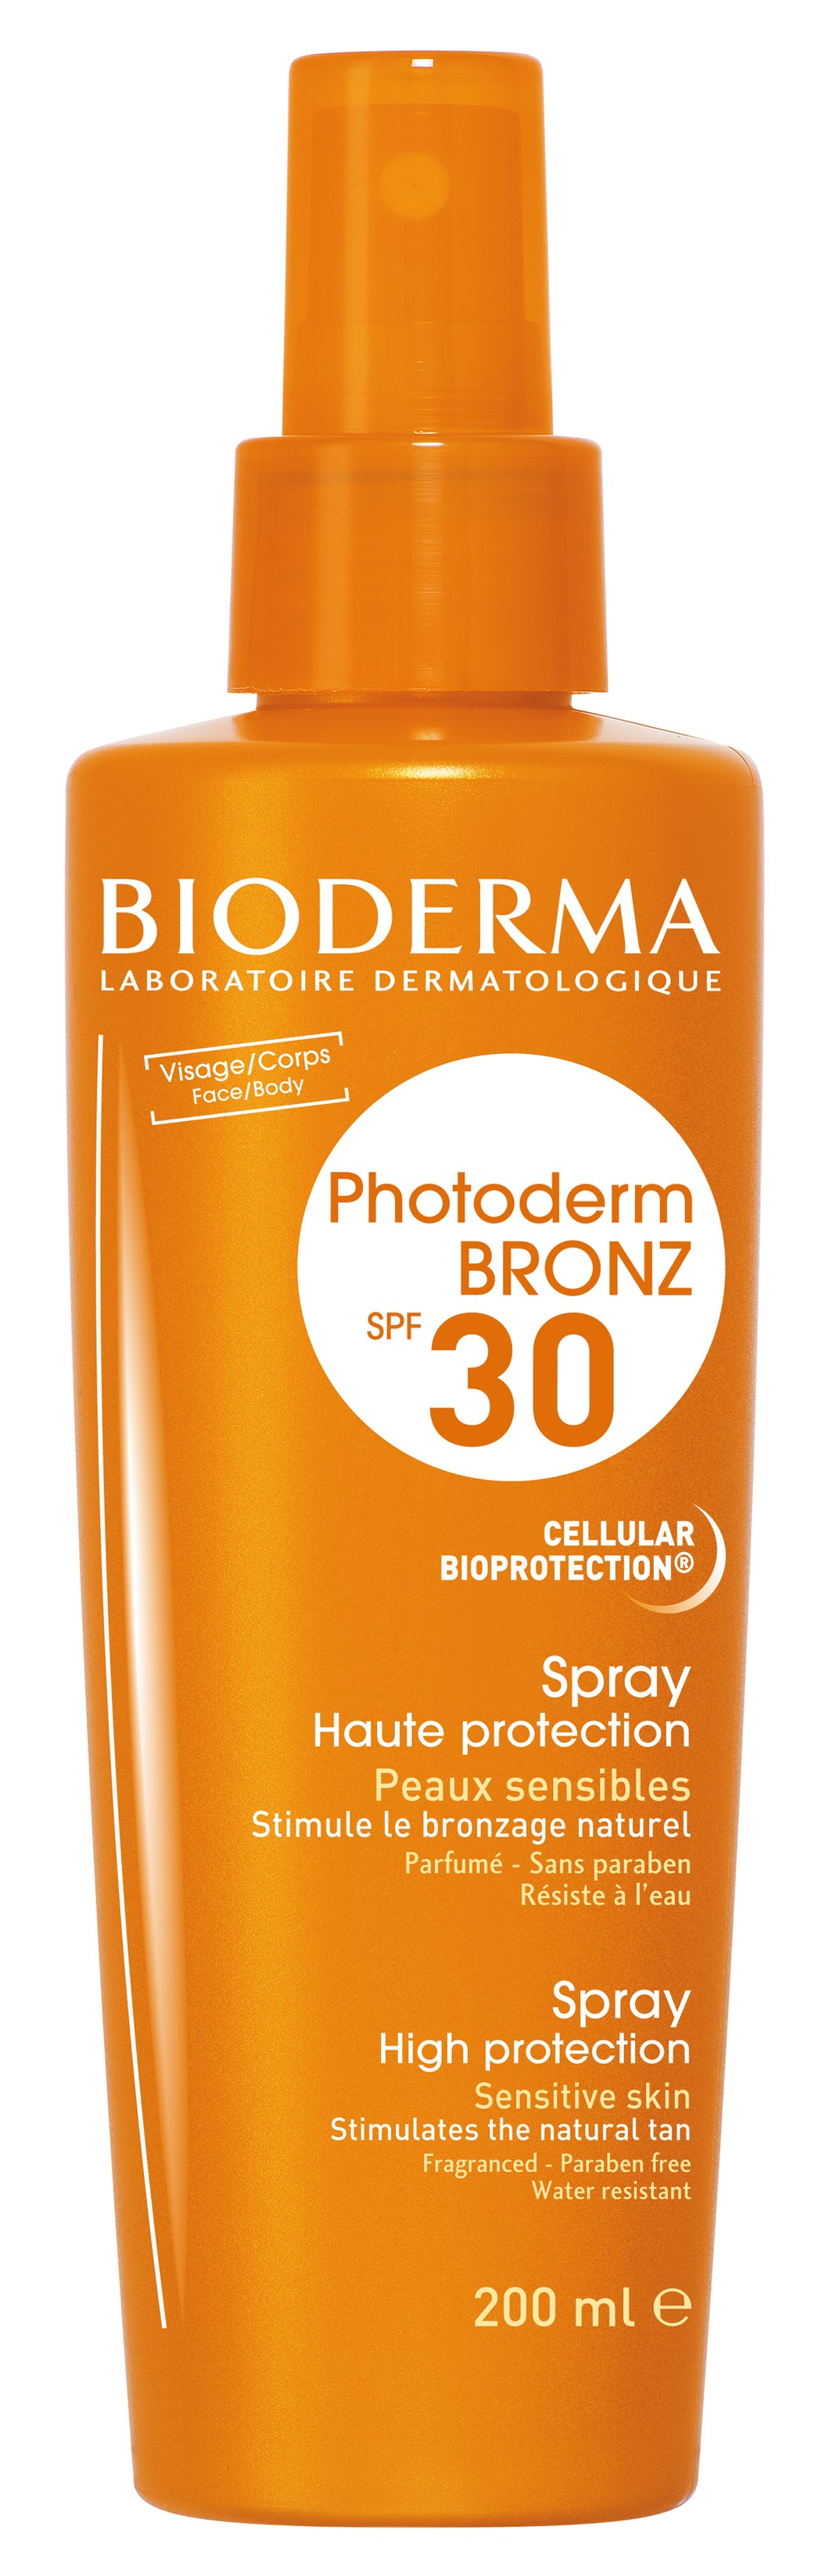 Bioderma Photoderm Bronz Spray SPF30 200 ml